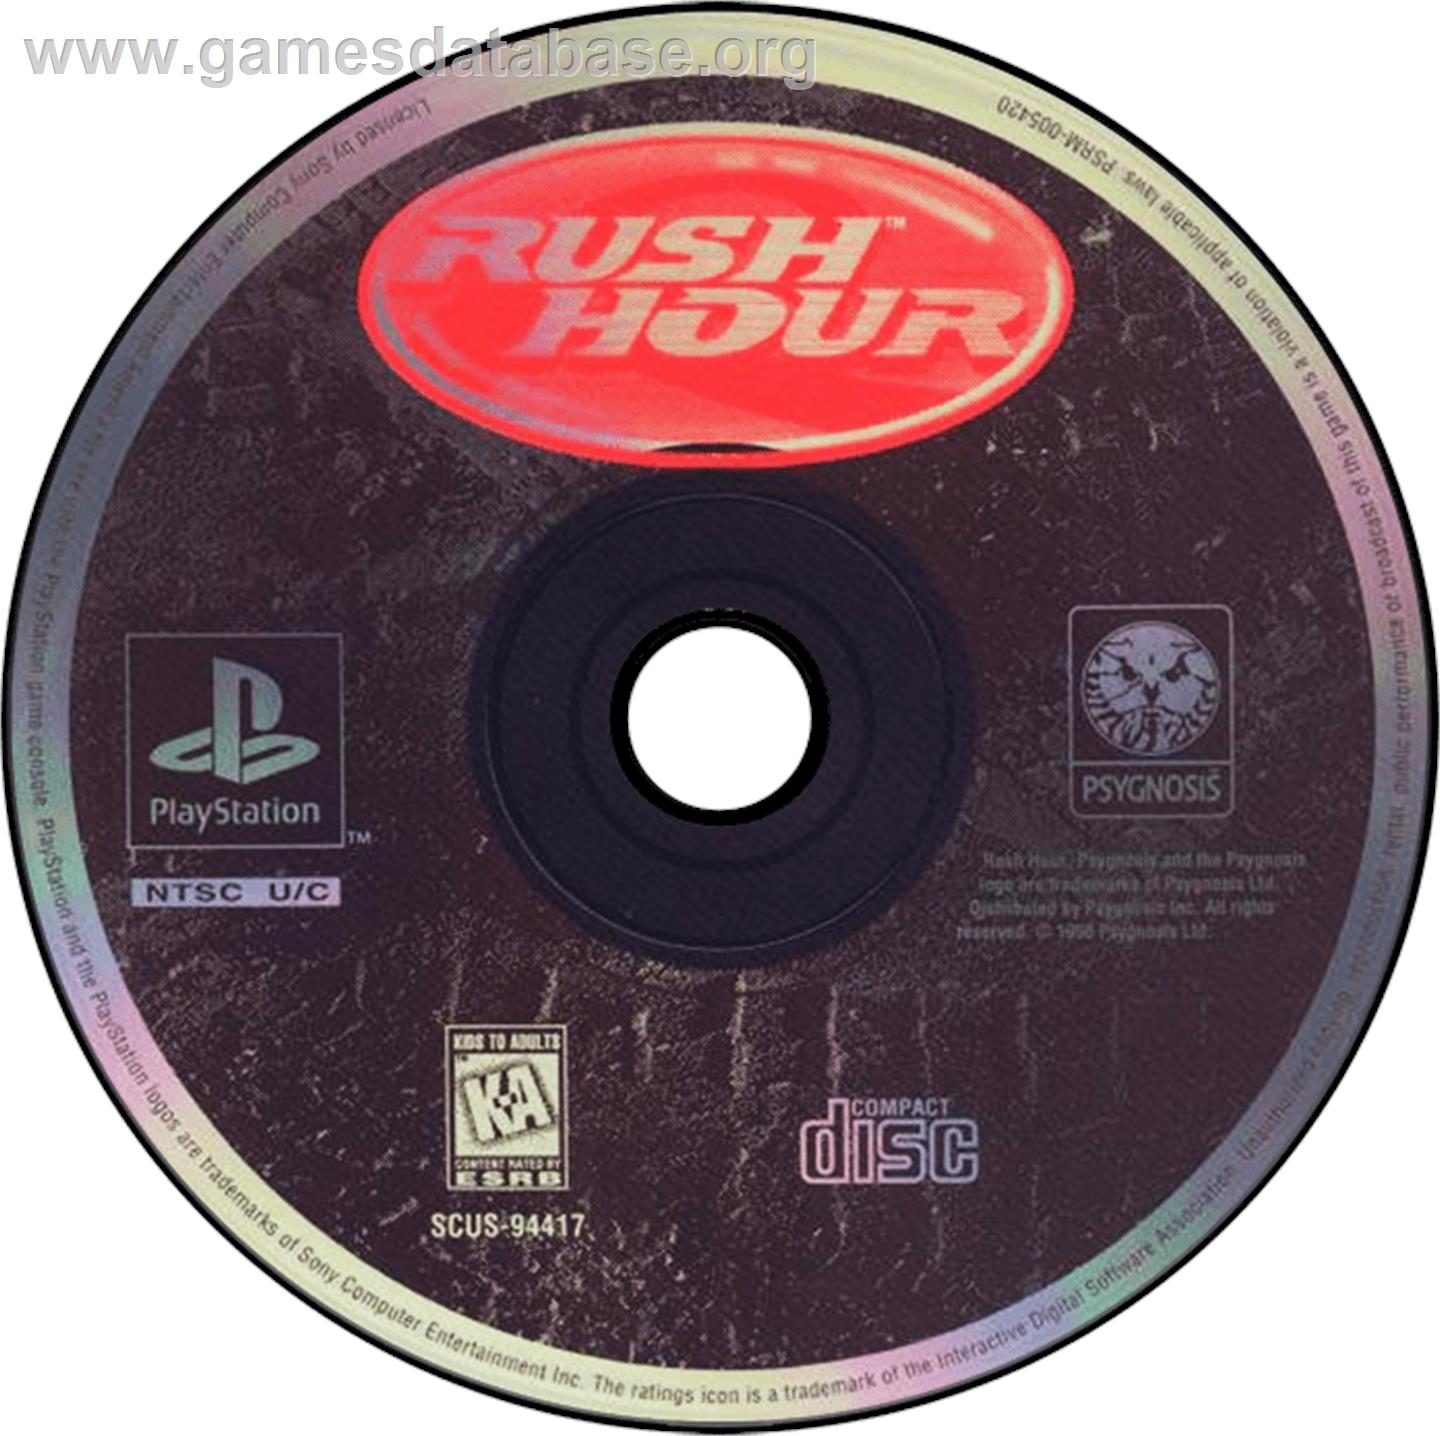 Rush Hour - Sony Playstation - Artwork - Disc